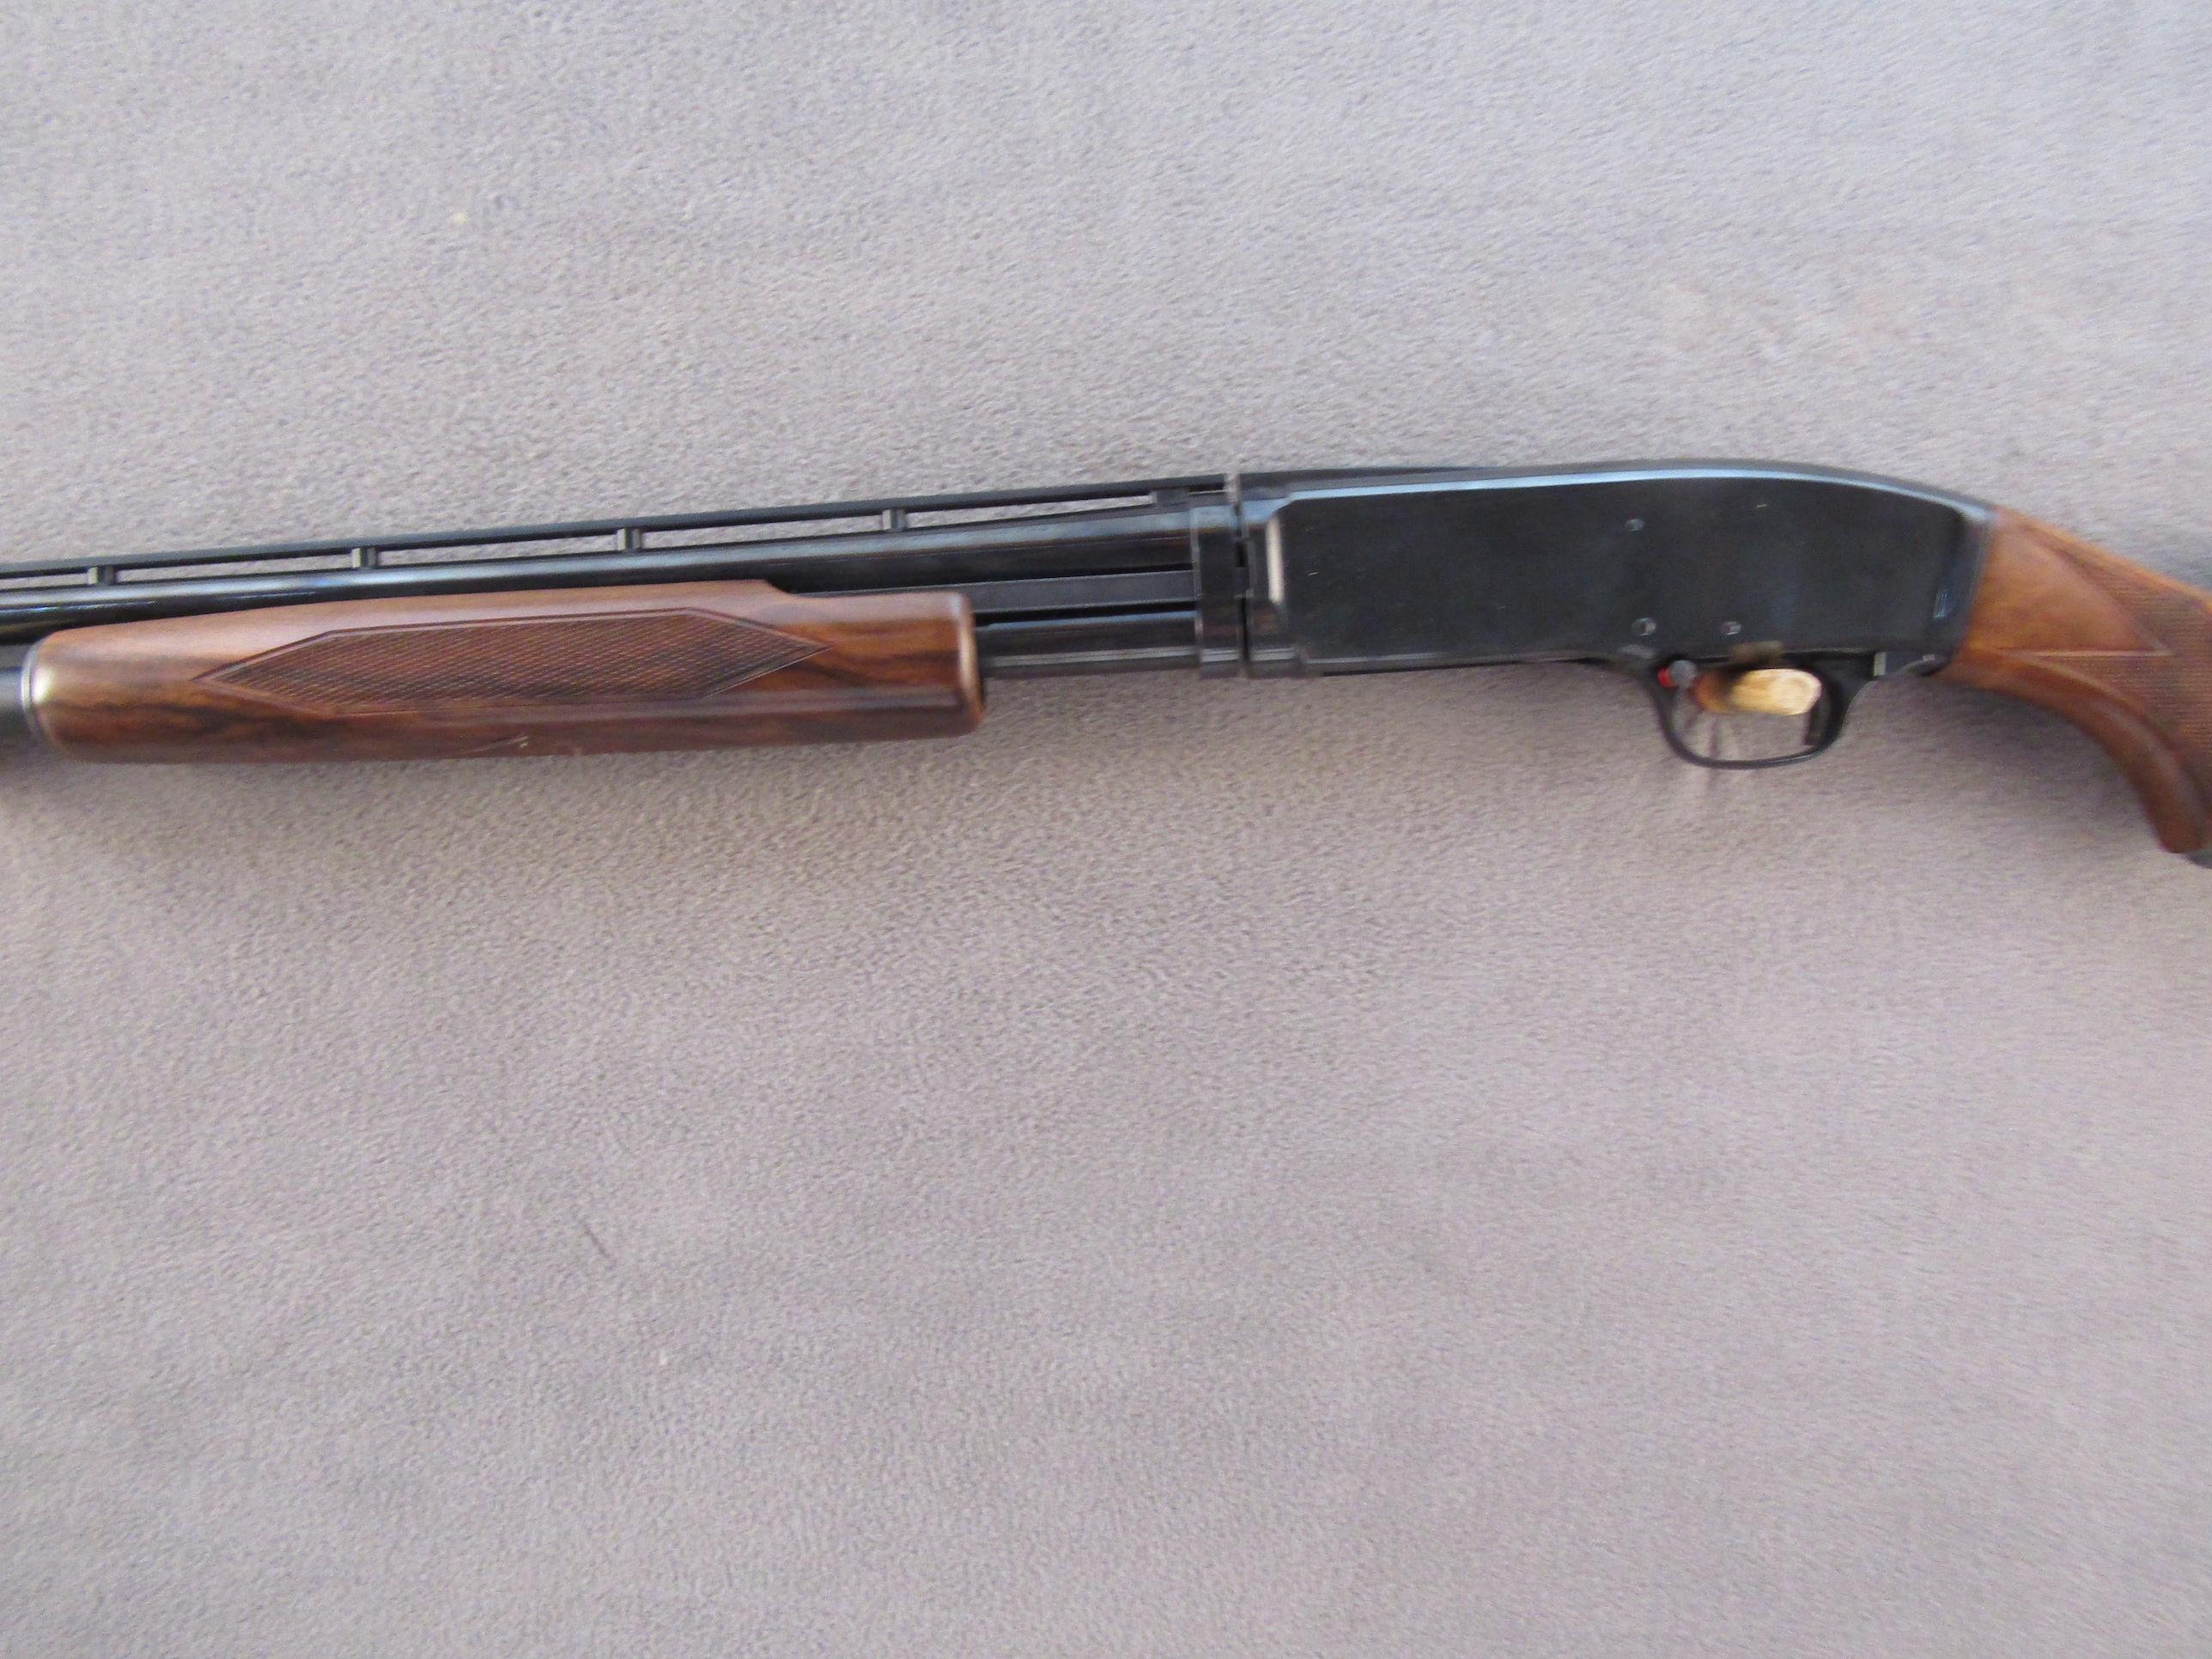 BROWNING Model 42, Pump-Action Shotgun, .410, S#00864NZ882